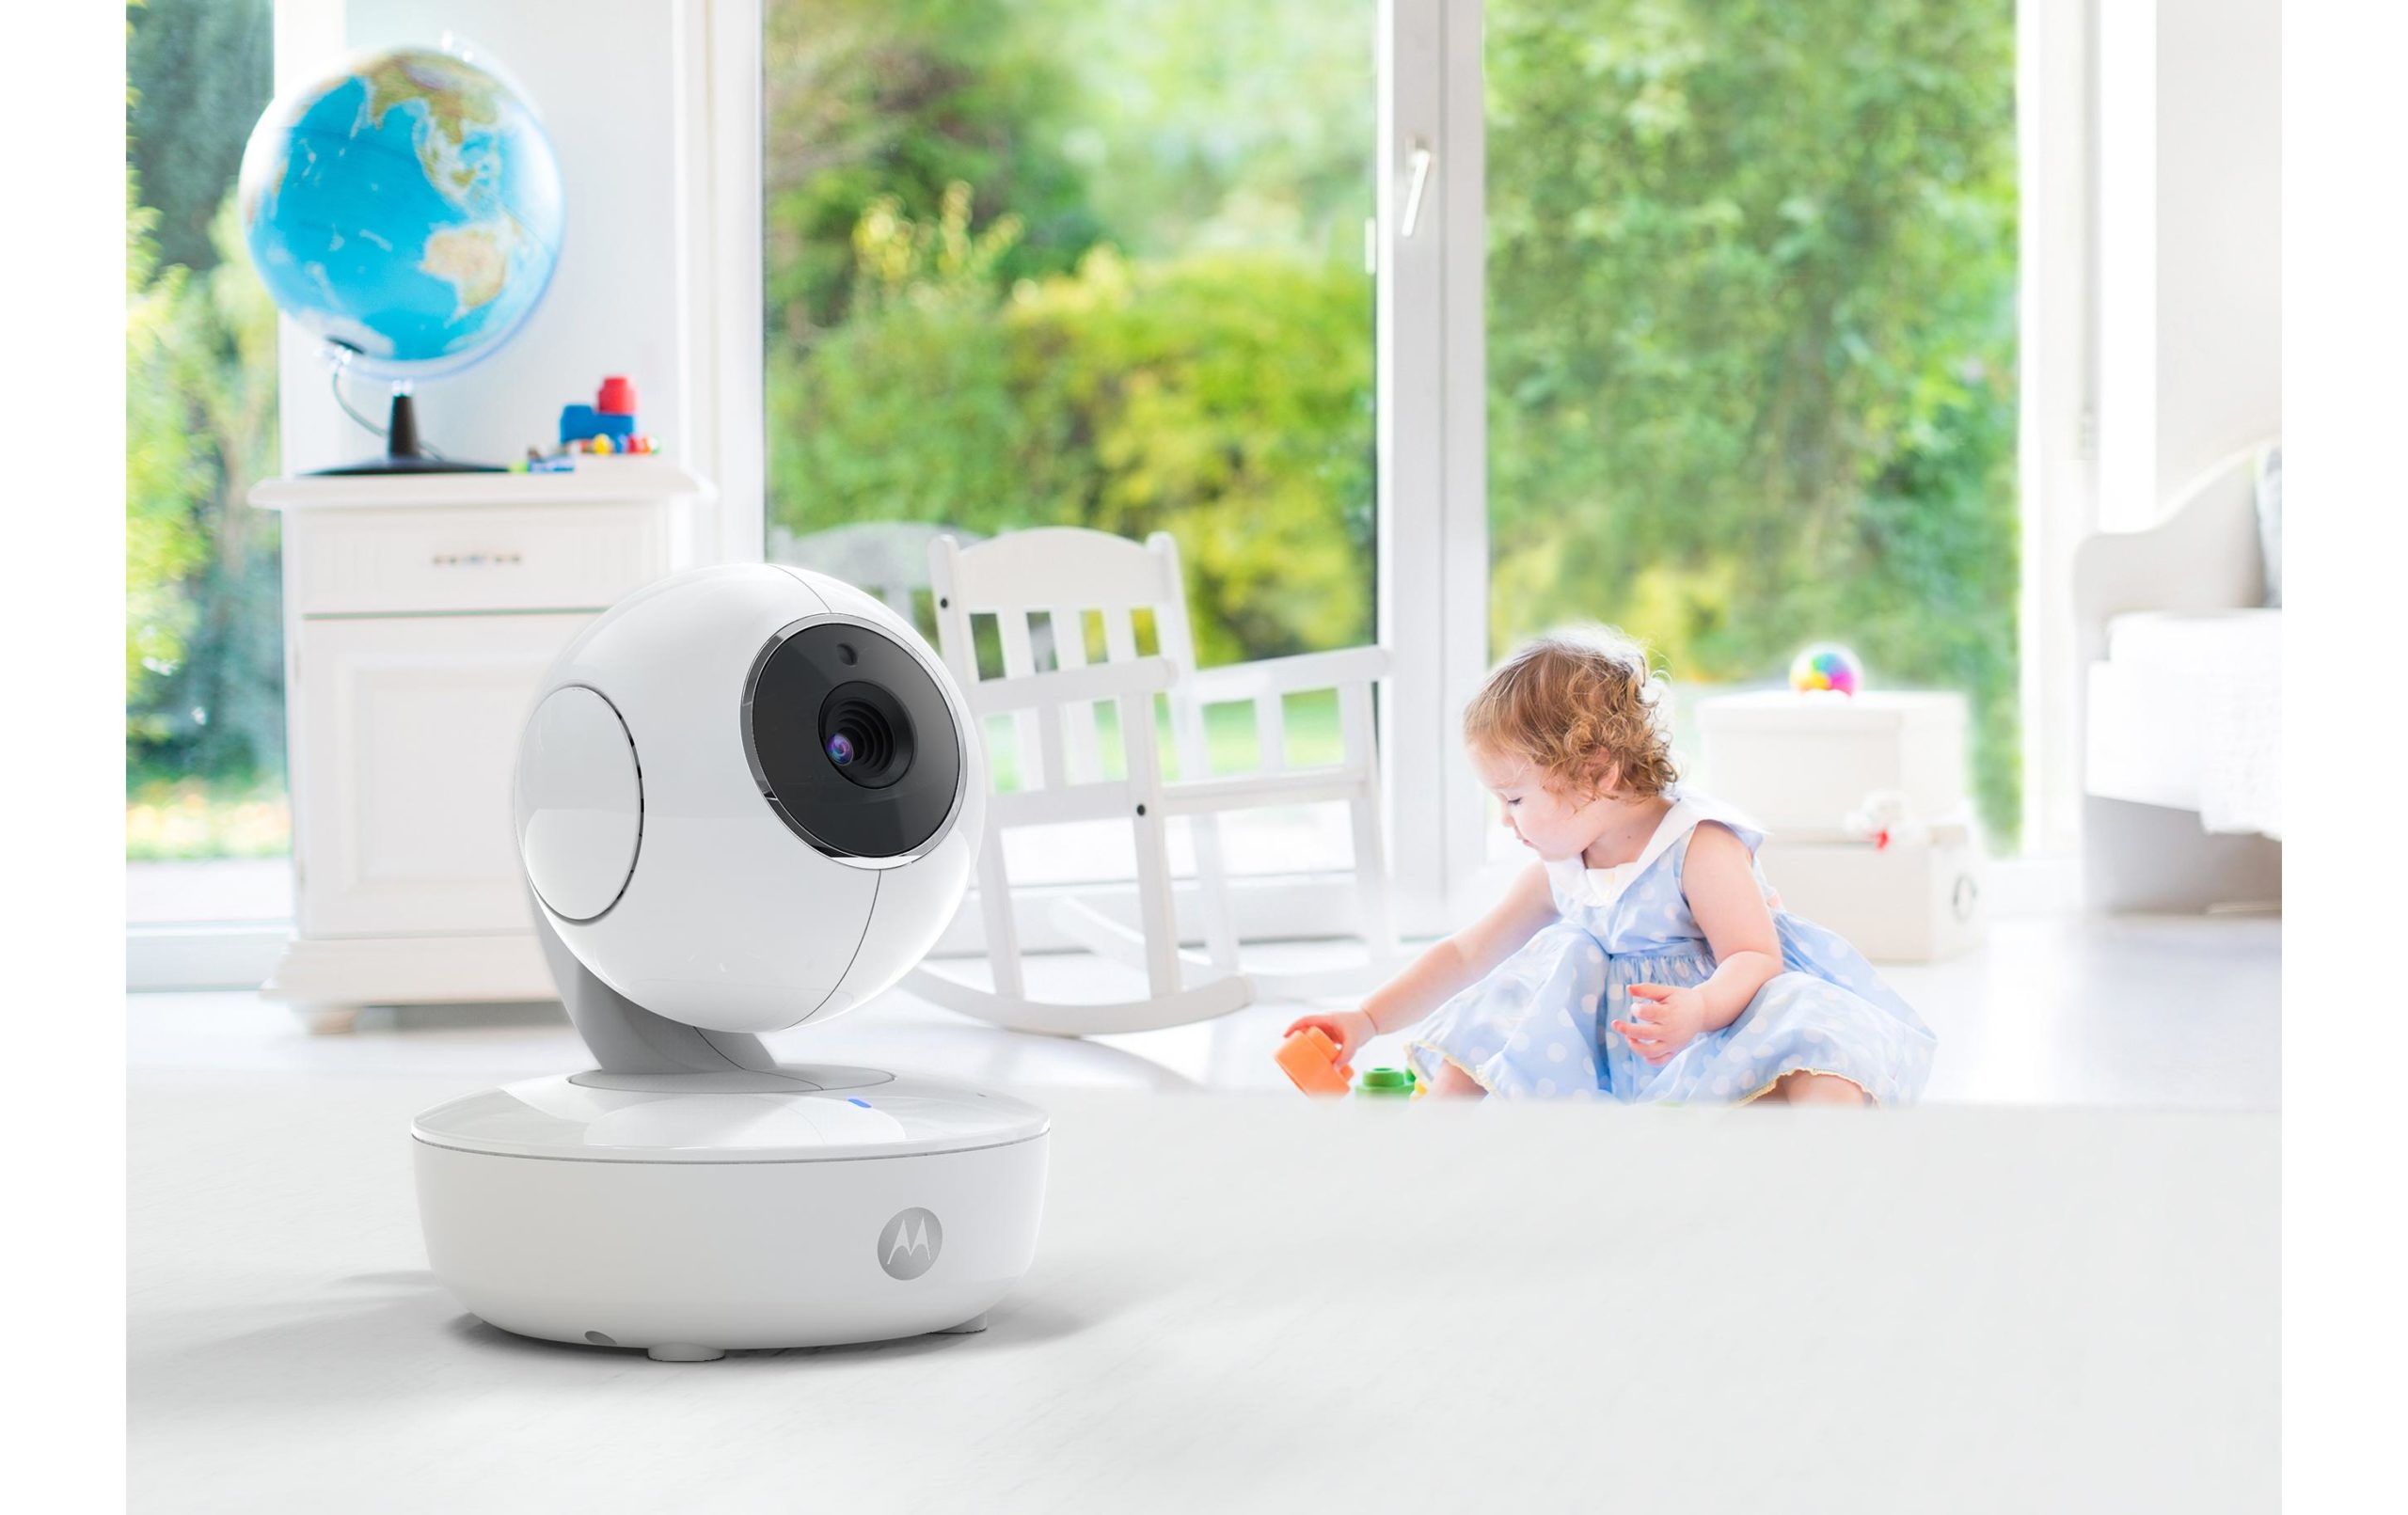 Caméra écoute-bébé vidéo TIGEX Baby alarm vidéo avec home